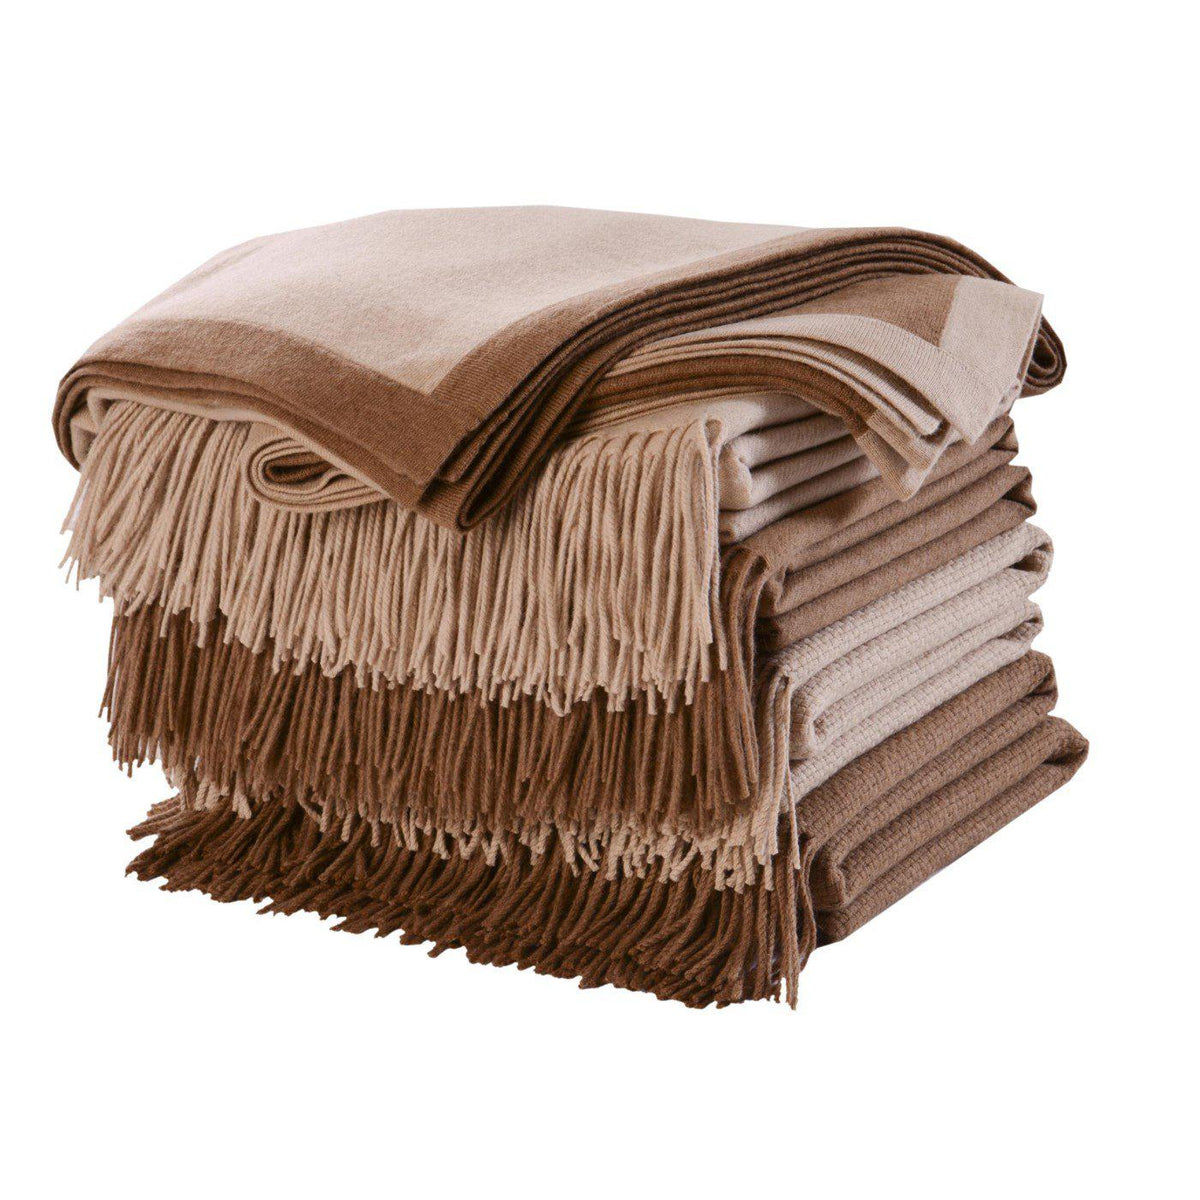 Throw Camel Flatweave CAMEL-Fibre-Throw blankets-Artistic Elements